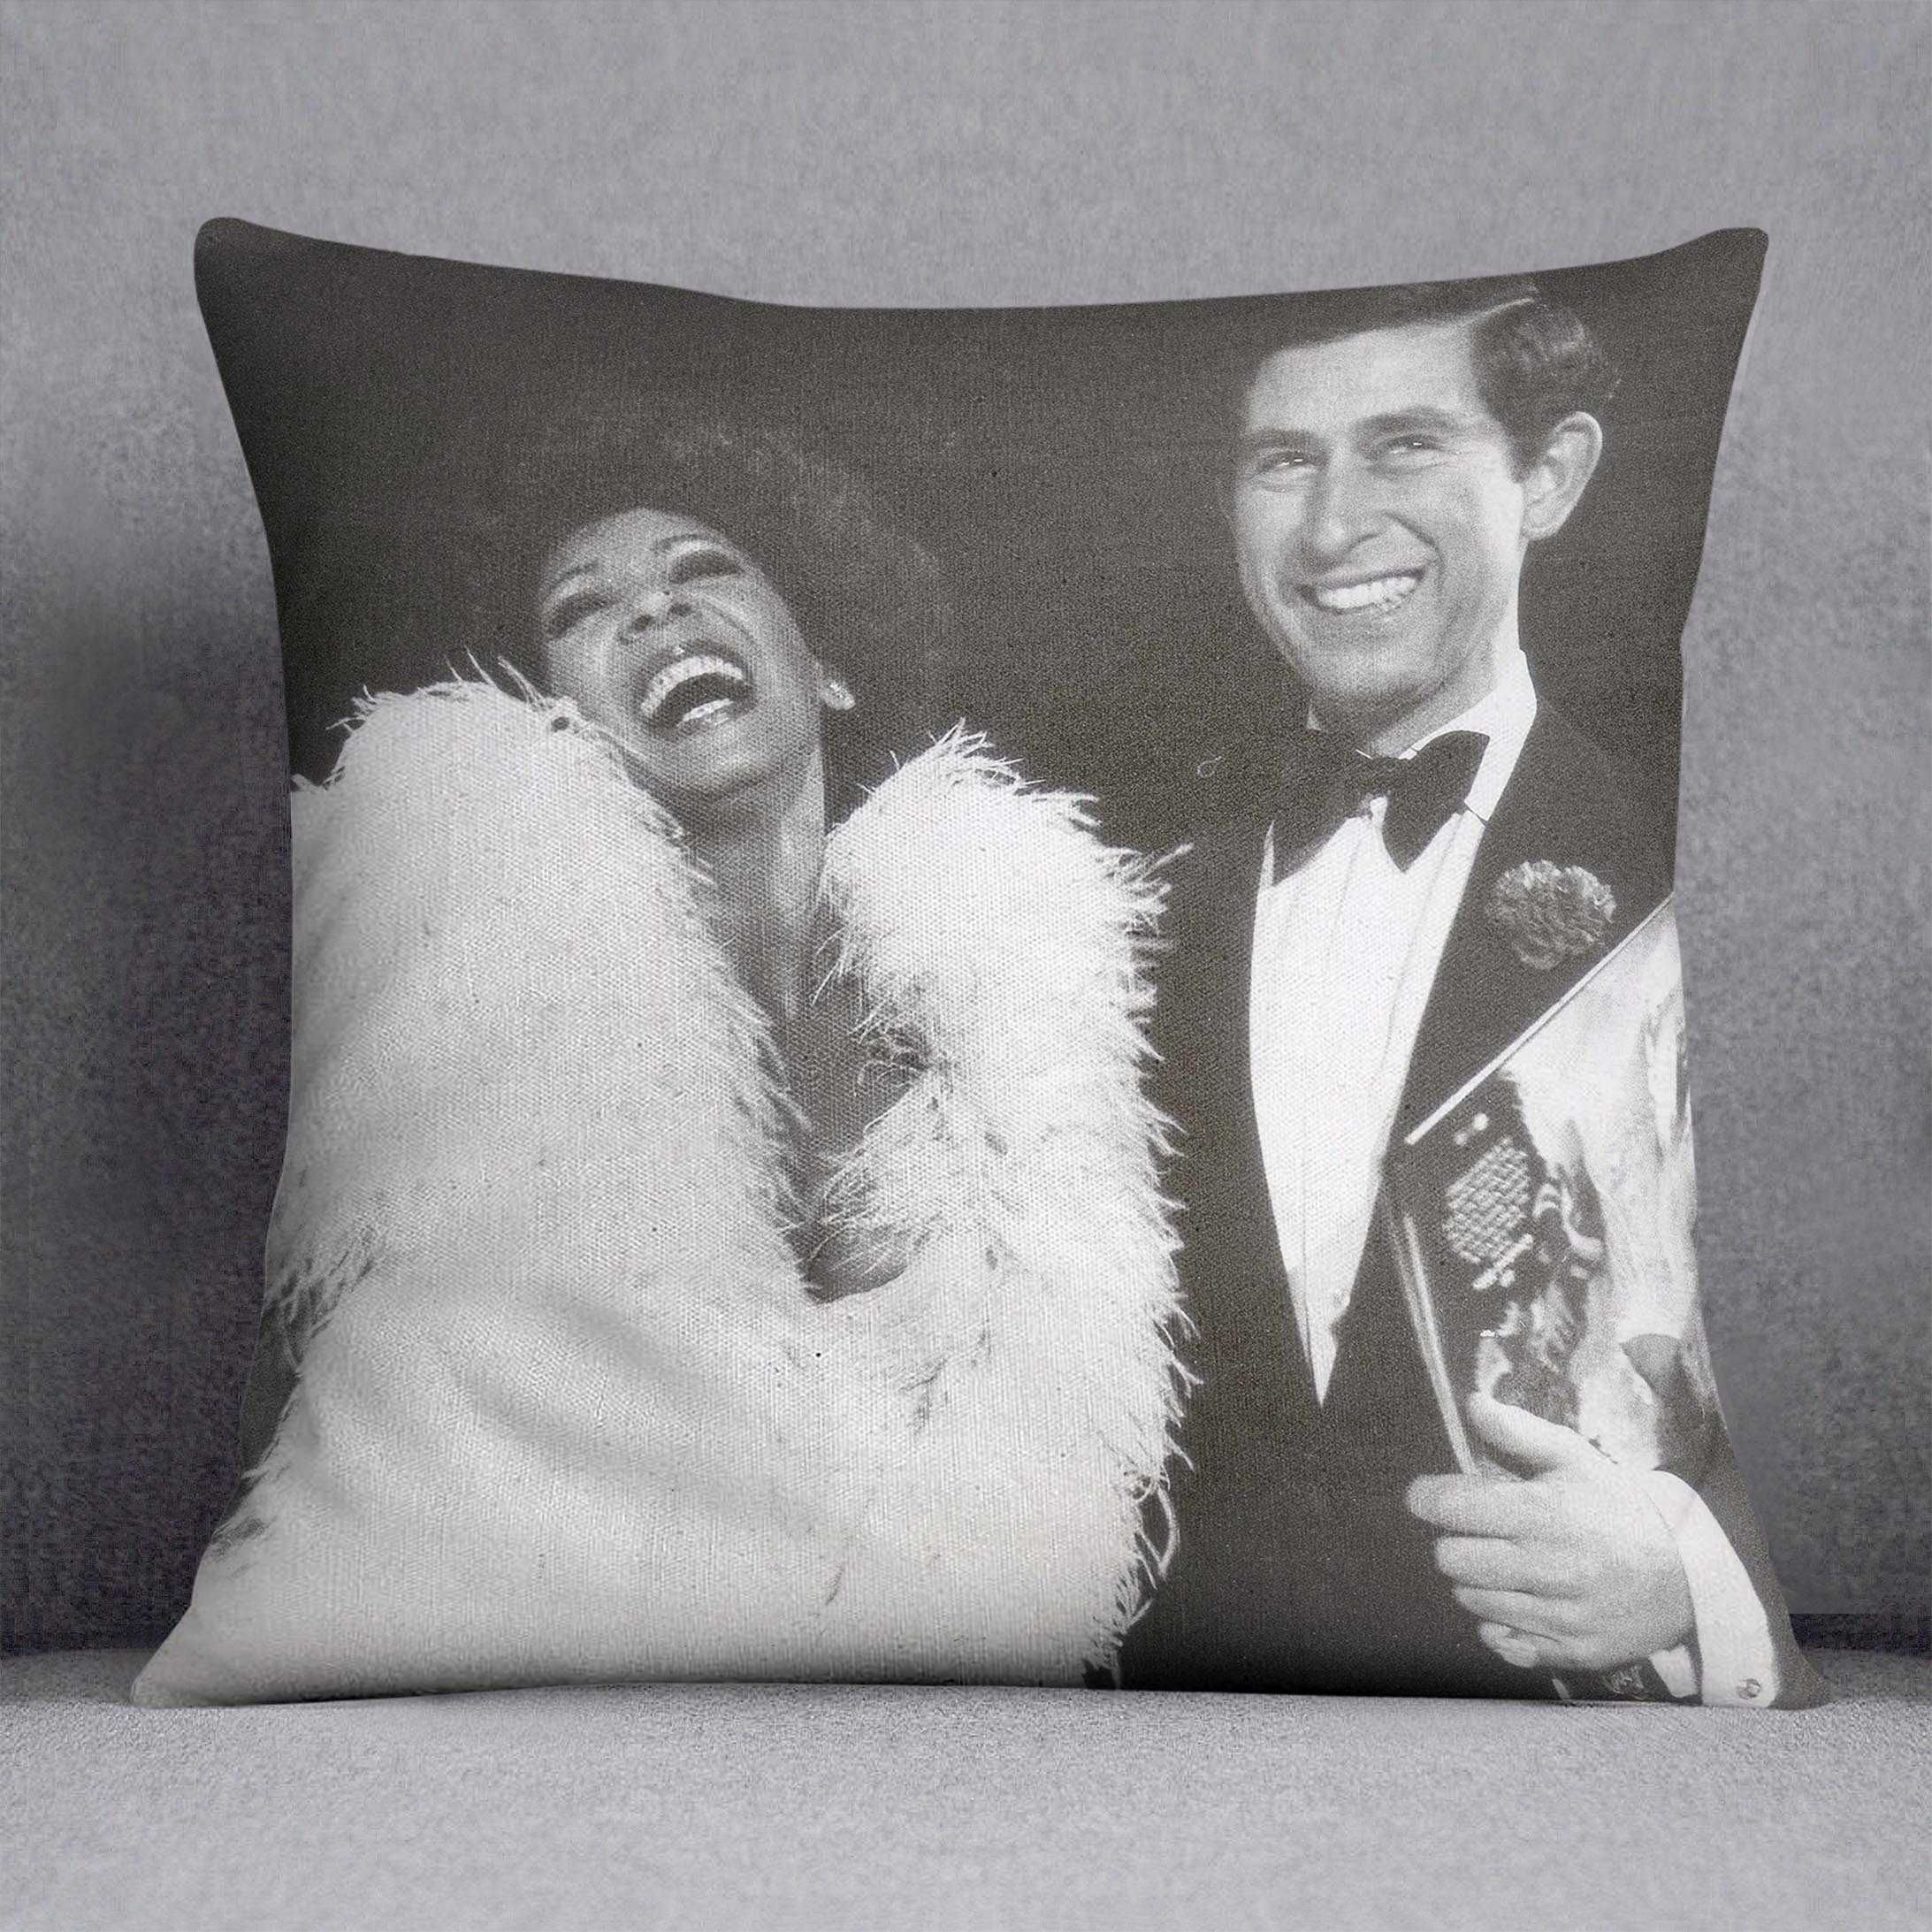 Prince Charles with Shirley Bassey Cushion